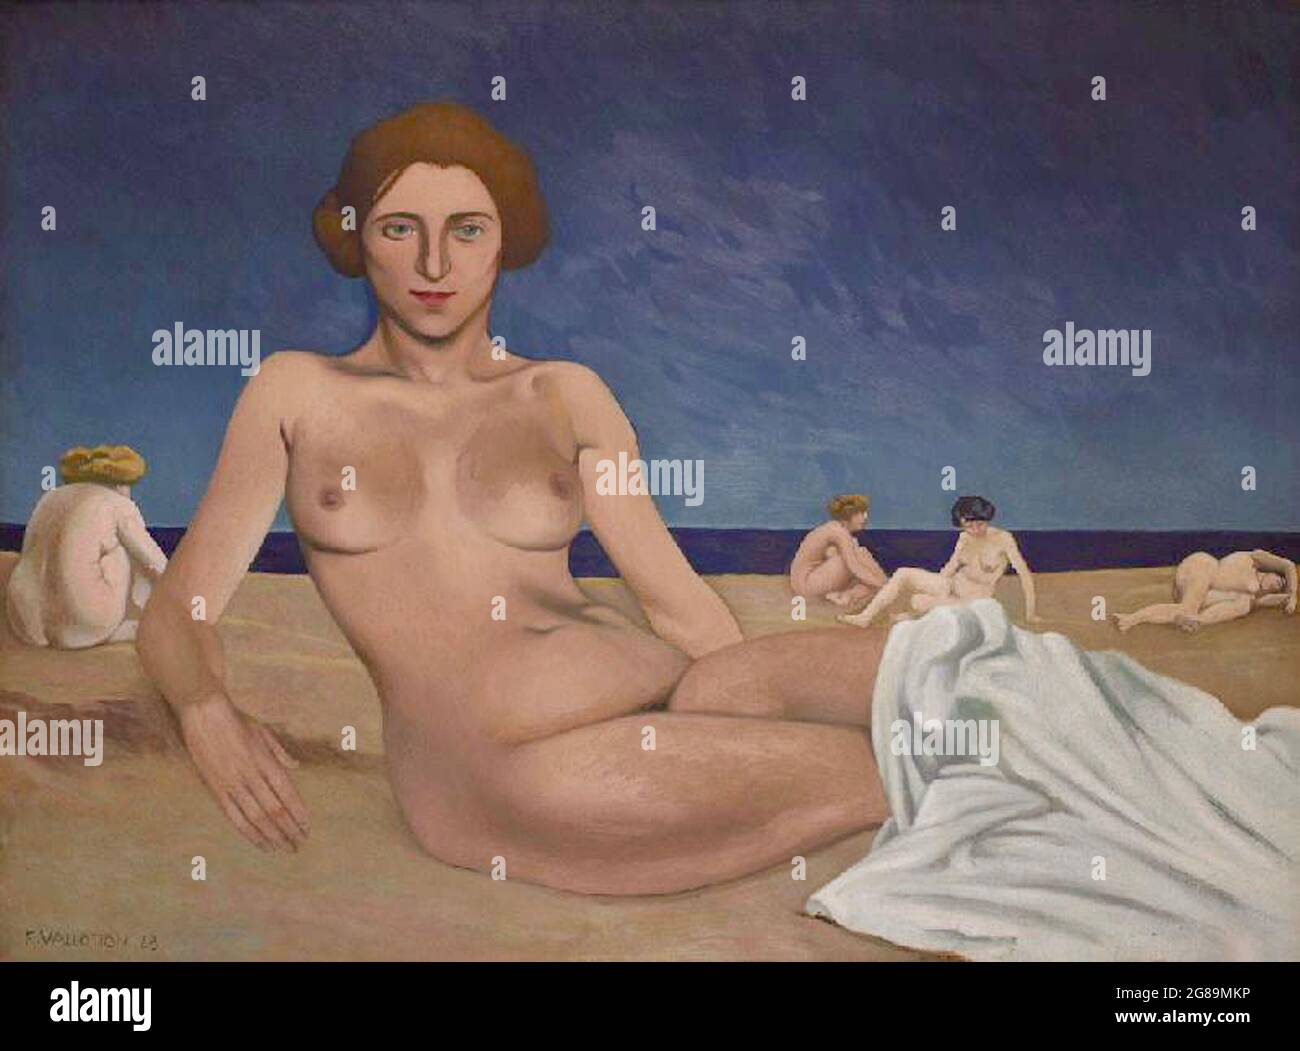 Félix Vallotton artwork entitled Le Bain de Soleil sur la Plage or Sunbathing on the Beach. Nud women enjoying the sunshine. Stock Photo